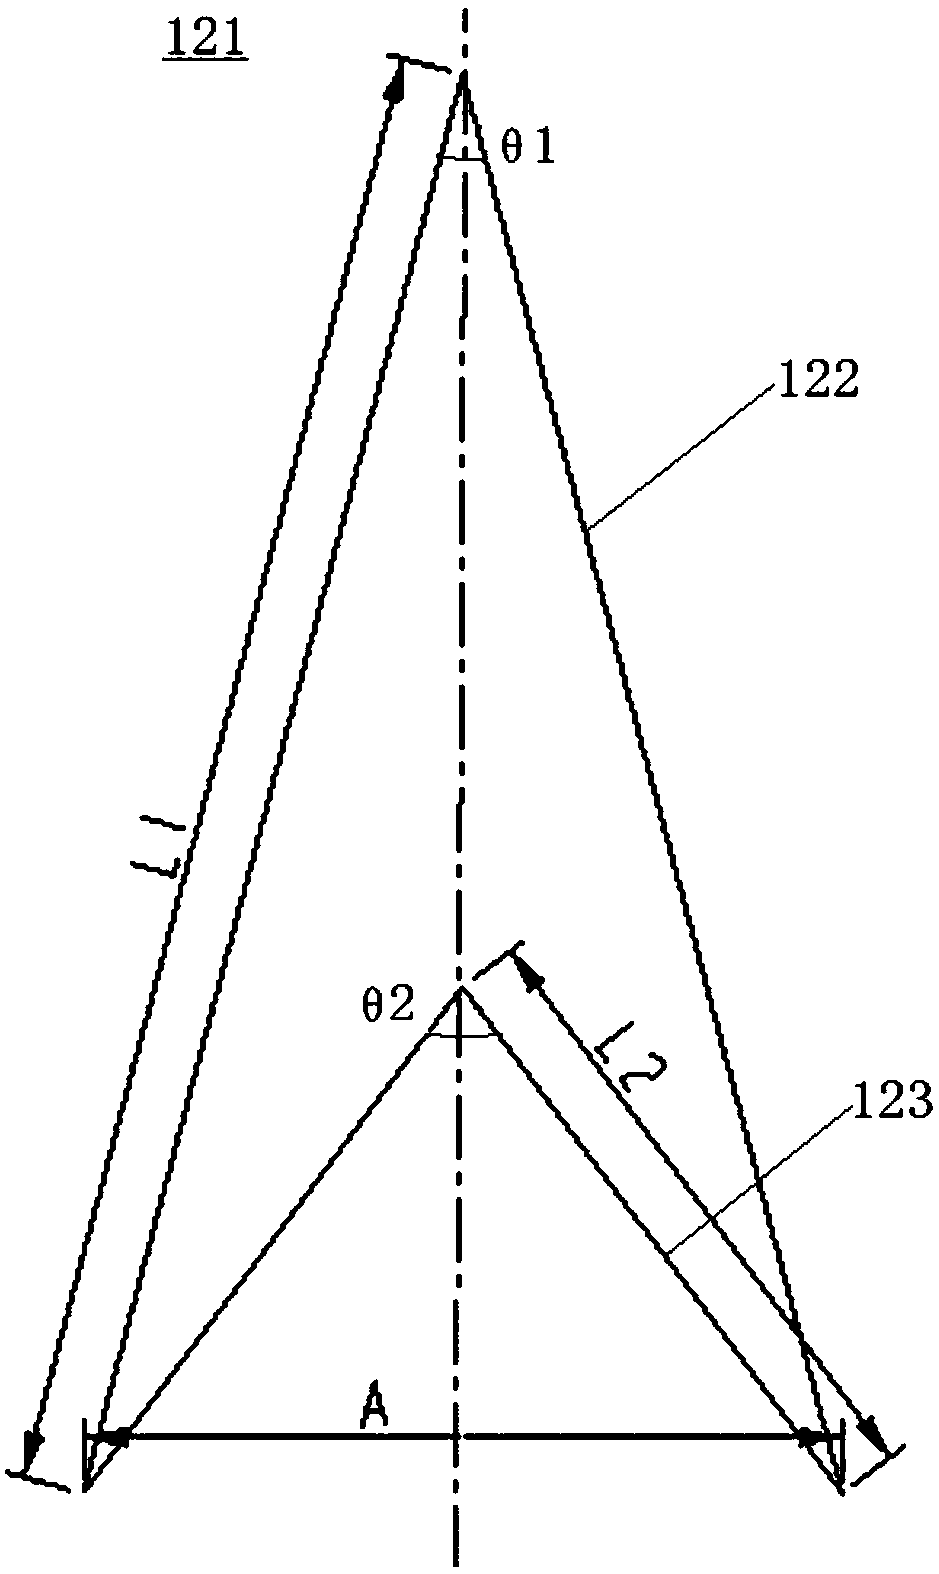 Double-headed arrow type pier protection device